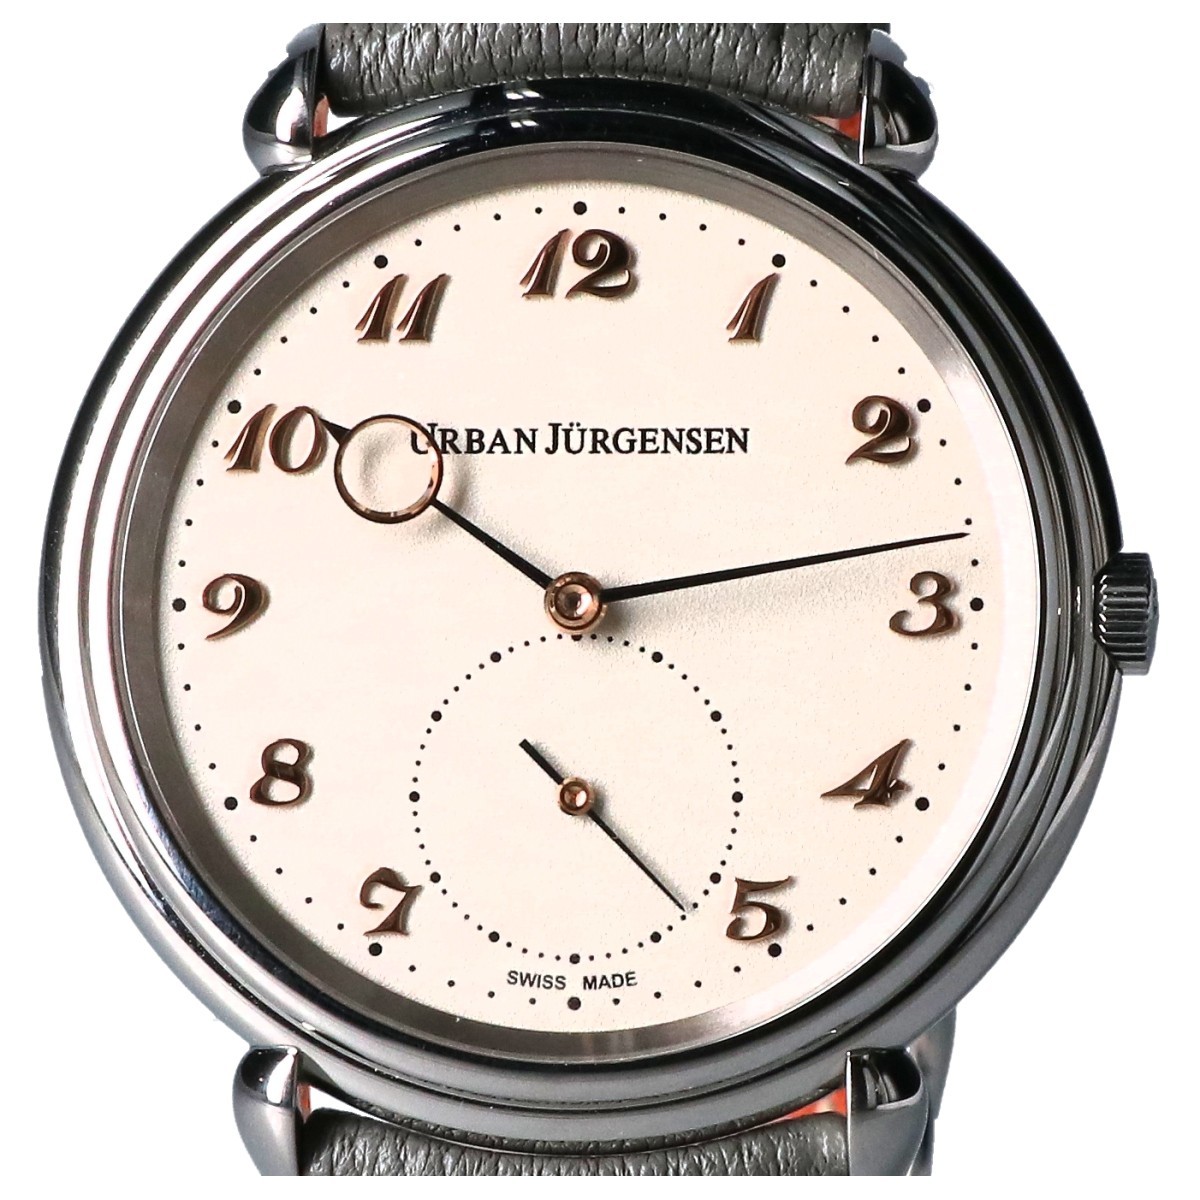 URBAN JURGENSEN ウルバン ヤーゲンセン リファレンス Big8 日本限定20本 00/20 自動巻き 腕時計 ケース:シルバー メンズ_画像2